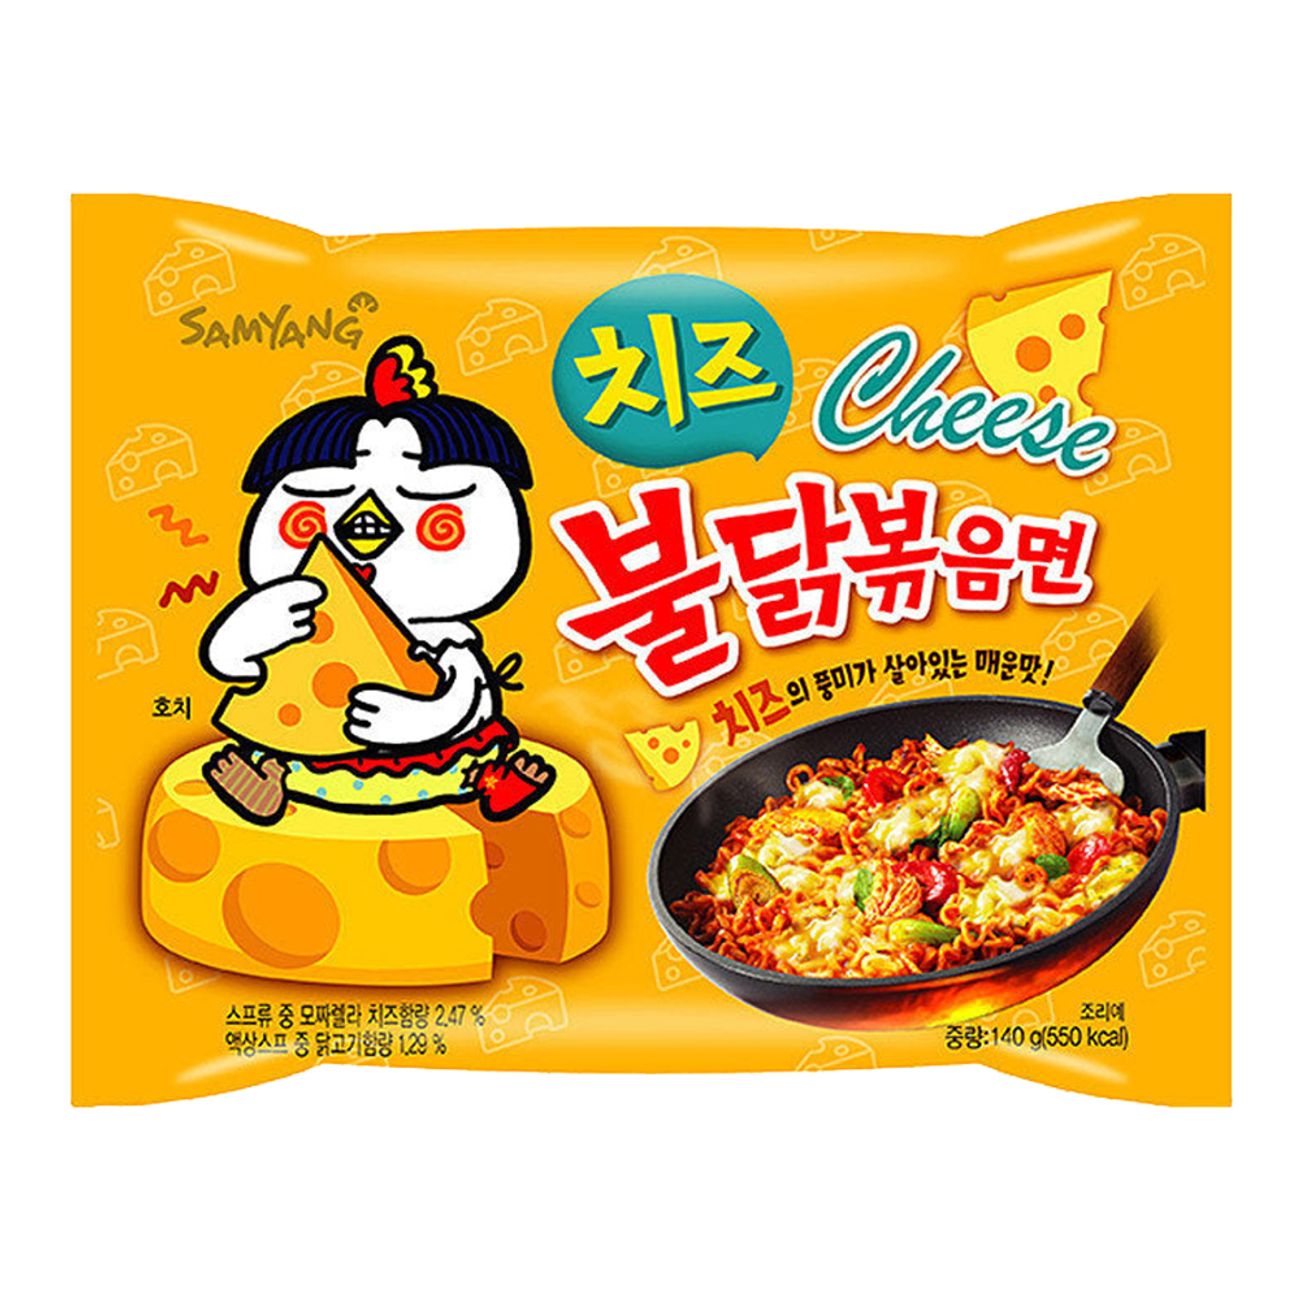 samyang-hot-chicken-cheese-ramen-noodles-89837-2